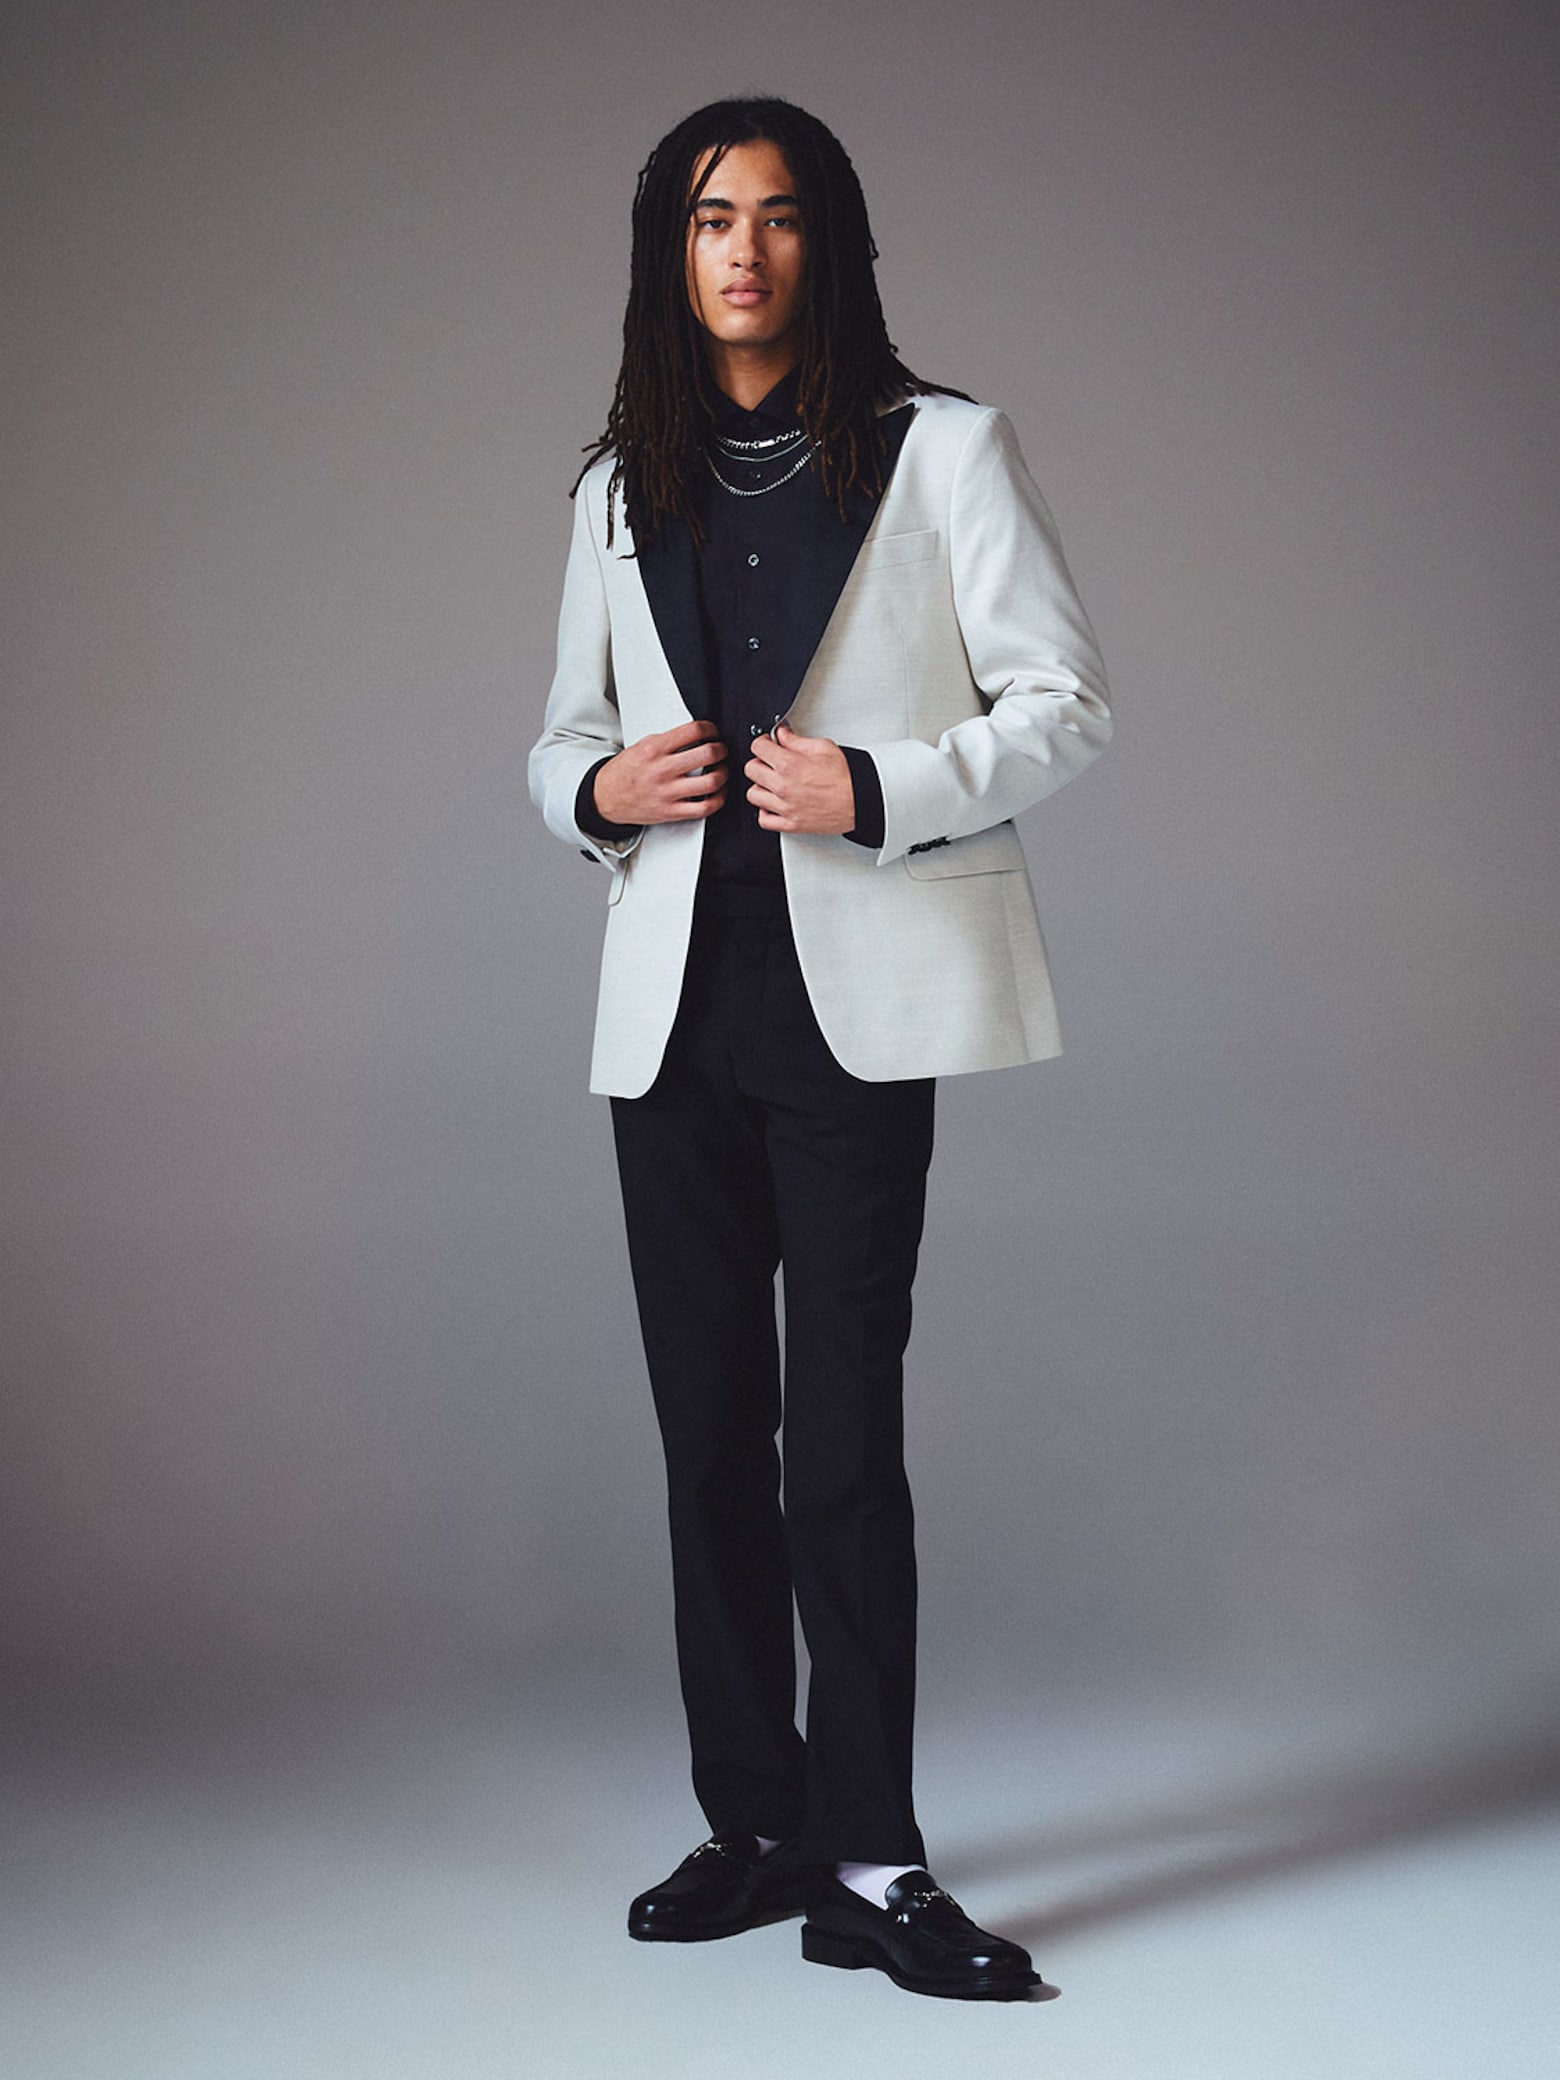 Alhassane - Classy White Black Suit Look